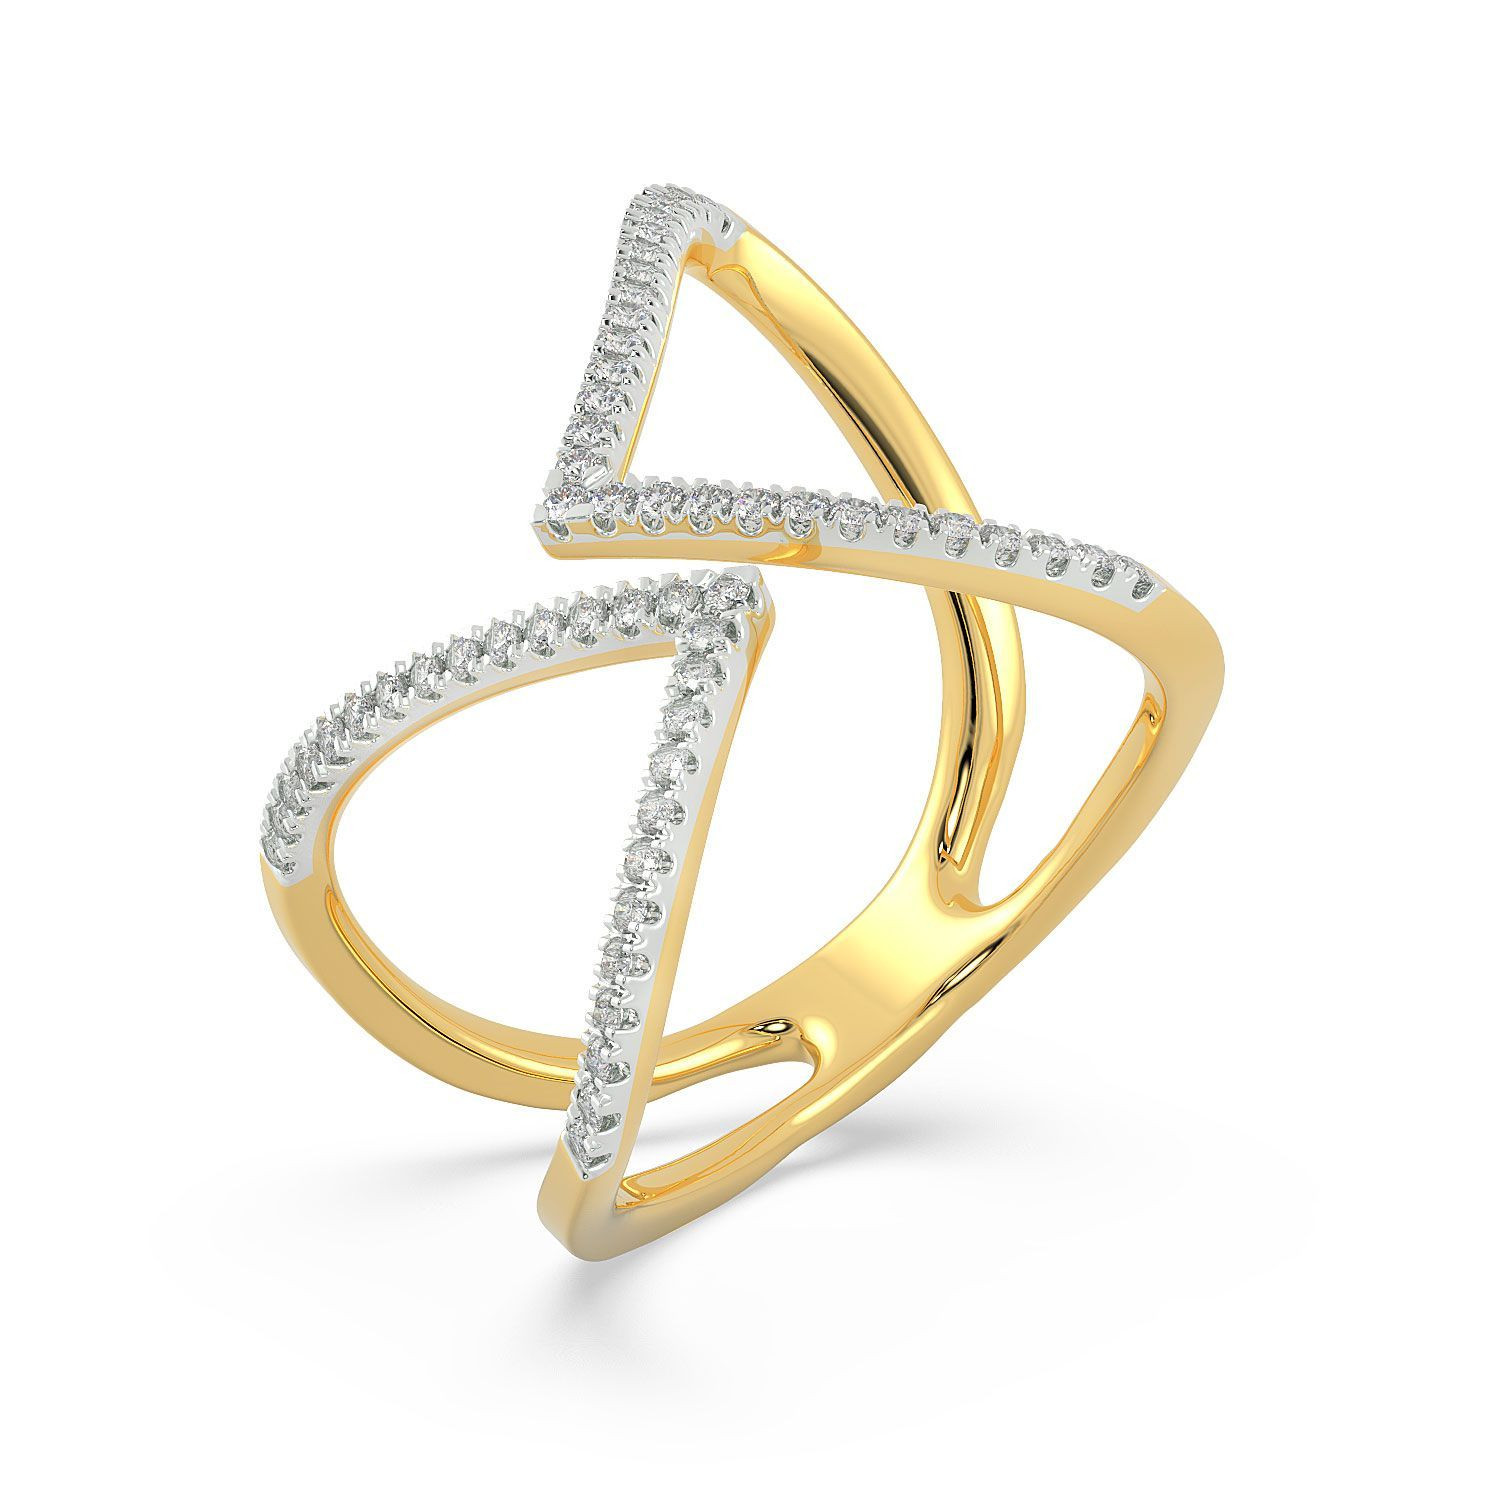 Showroom of 22k 916 cz diamonds premium gold ring for mens | Jewelxy -  238636